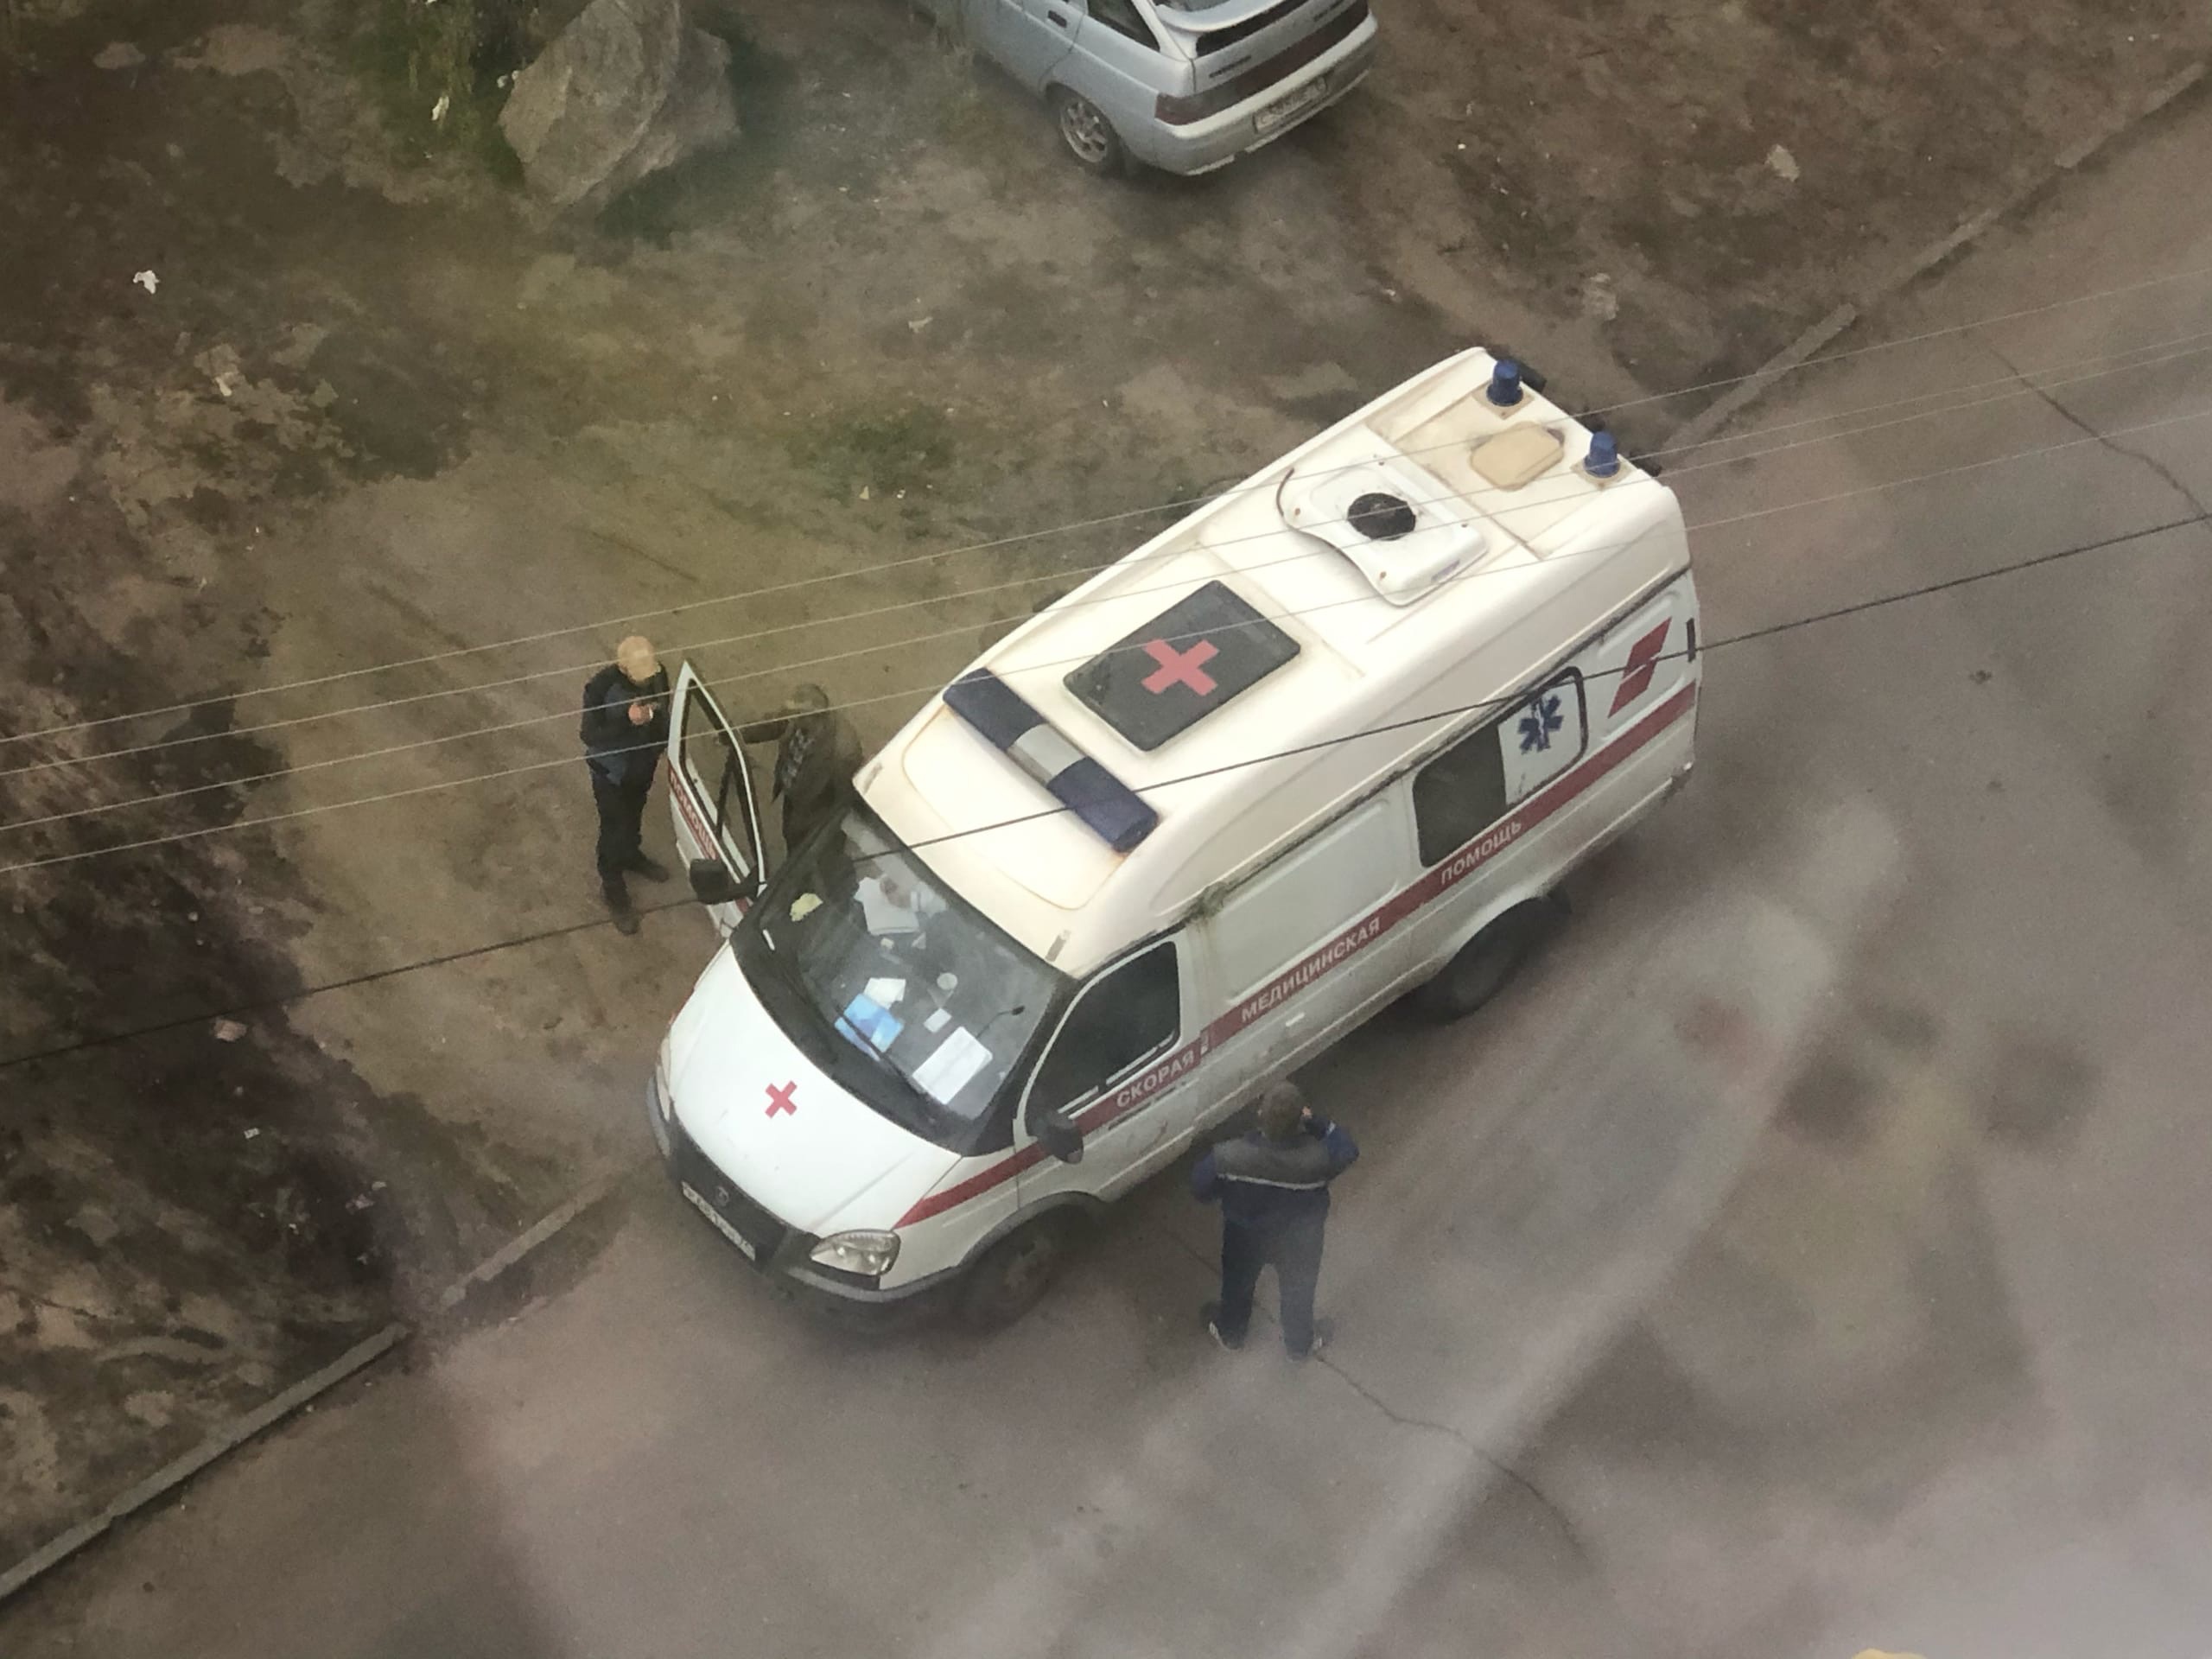  В центре Ярославля на остановке избили мужчину до потери памяти